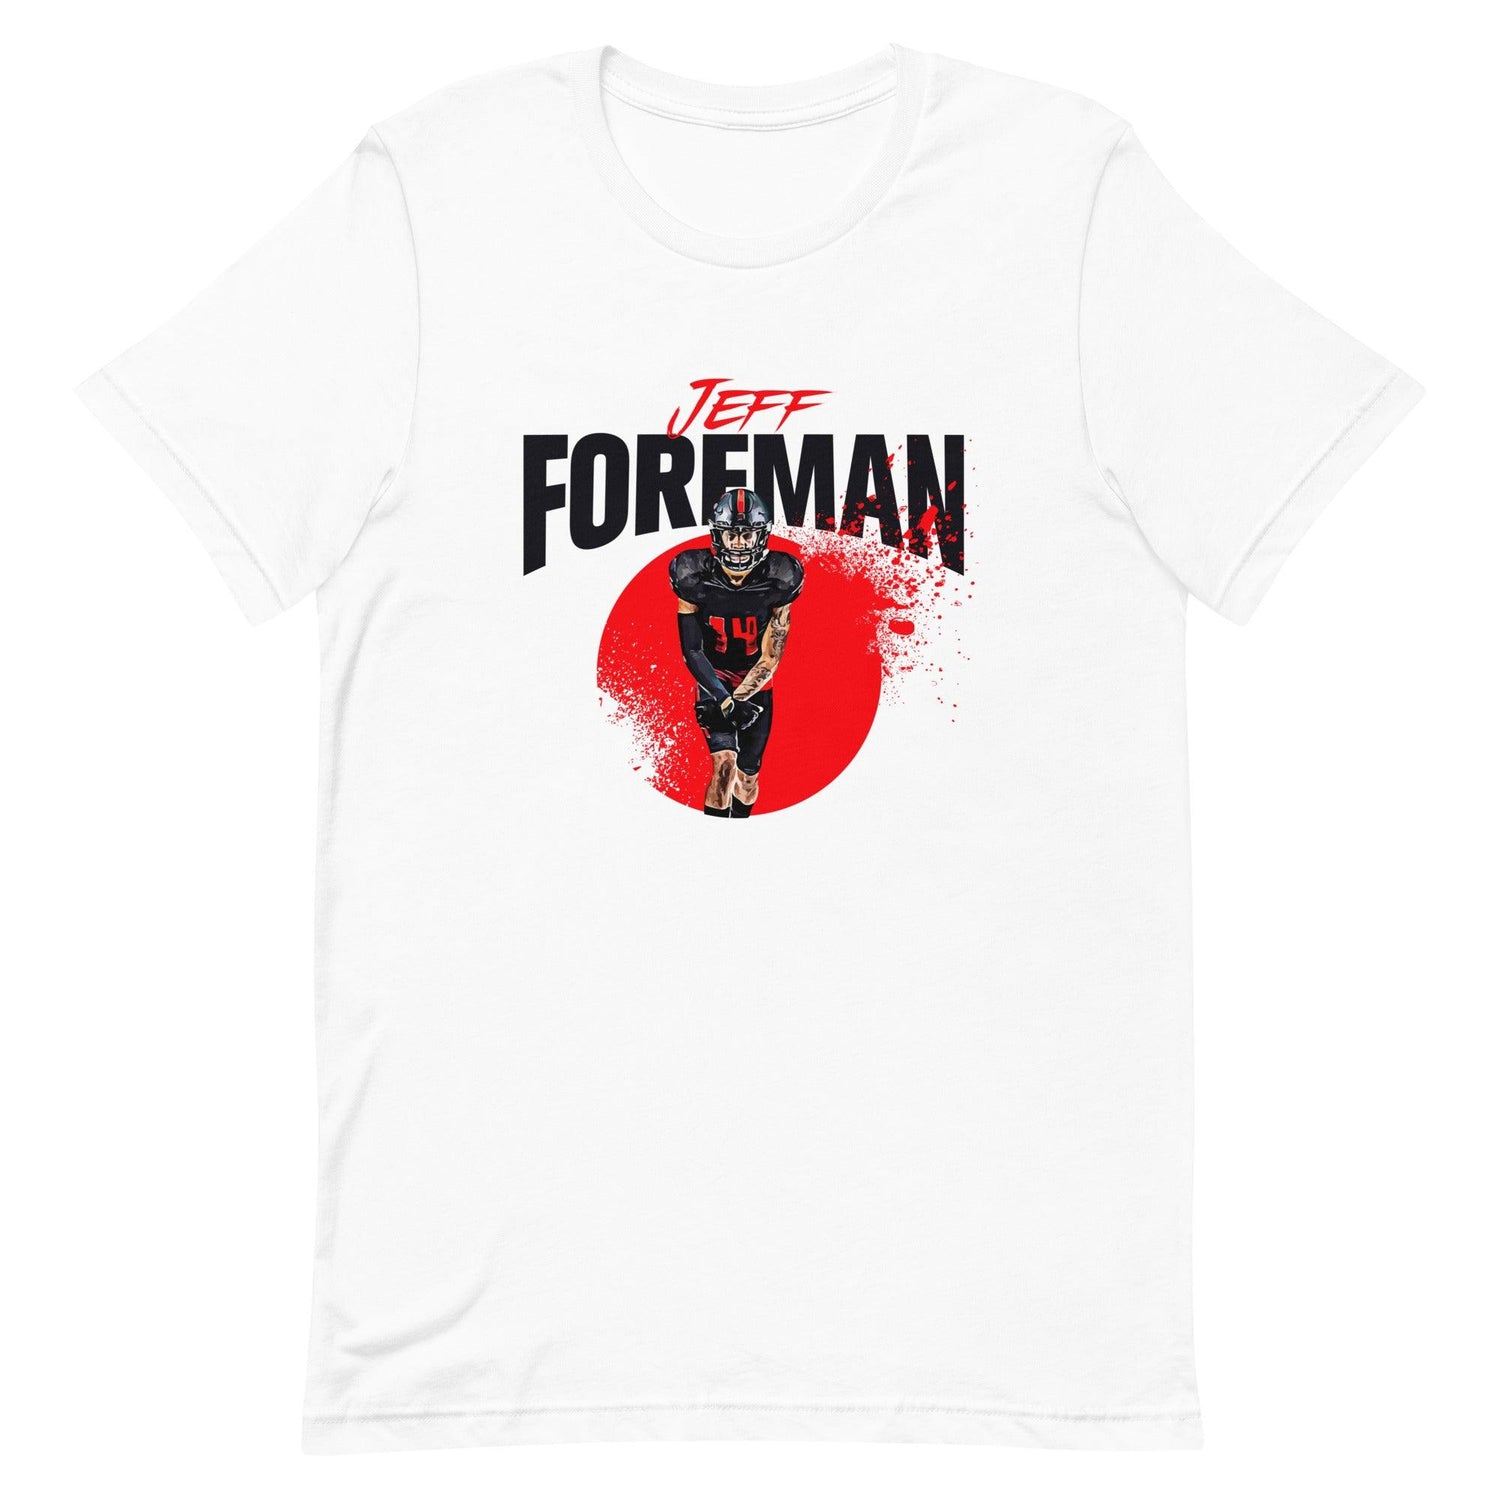 Jeff Foreman "Splash" t-shirt - Fan Arch